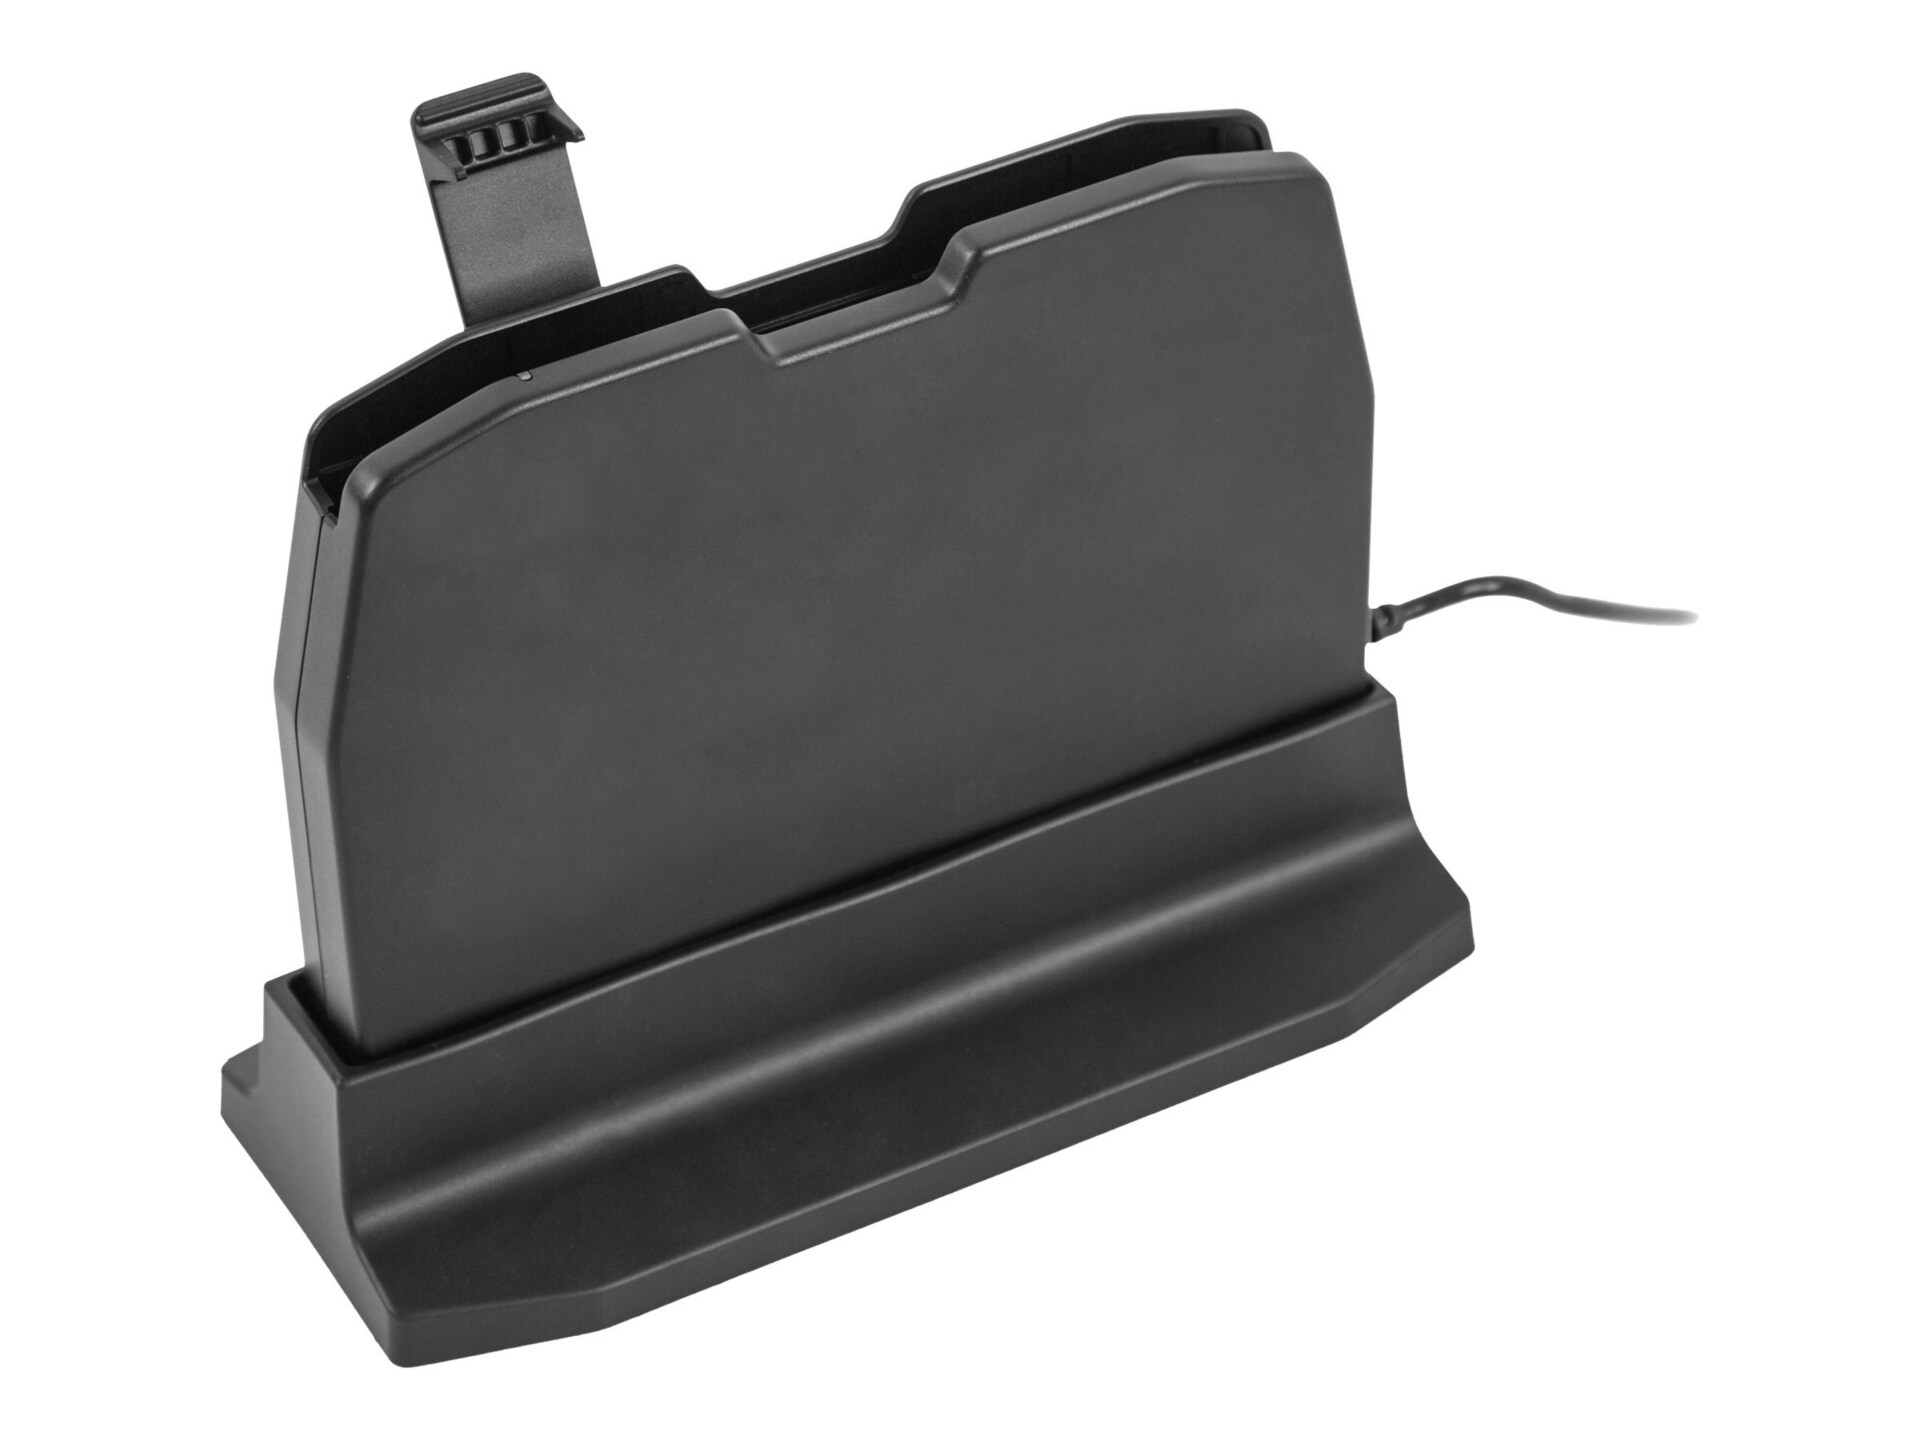 Motion Desktop Battery Charger Kit - battery charger